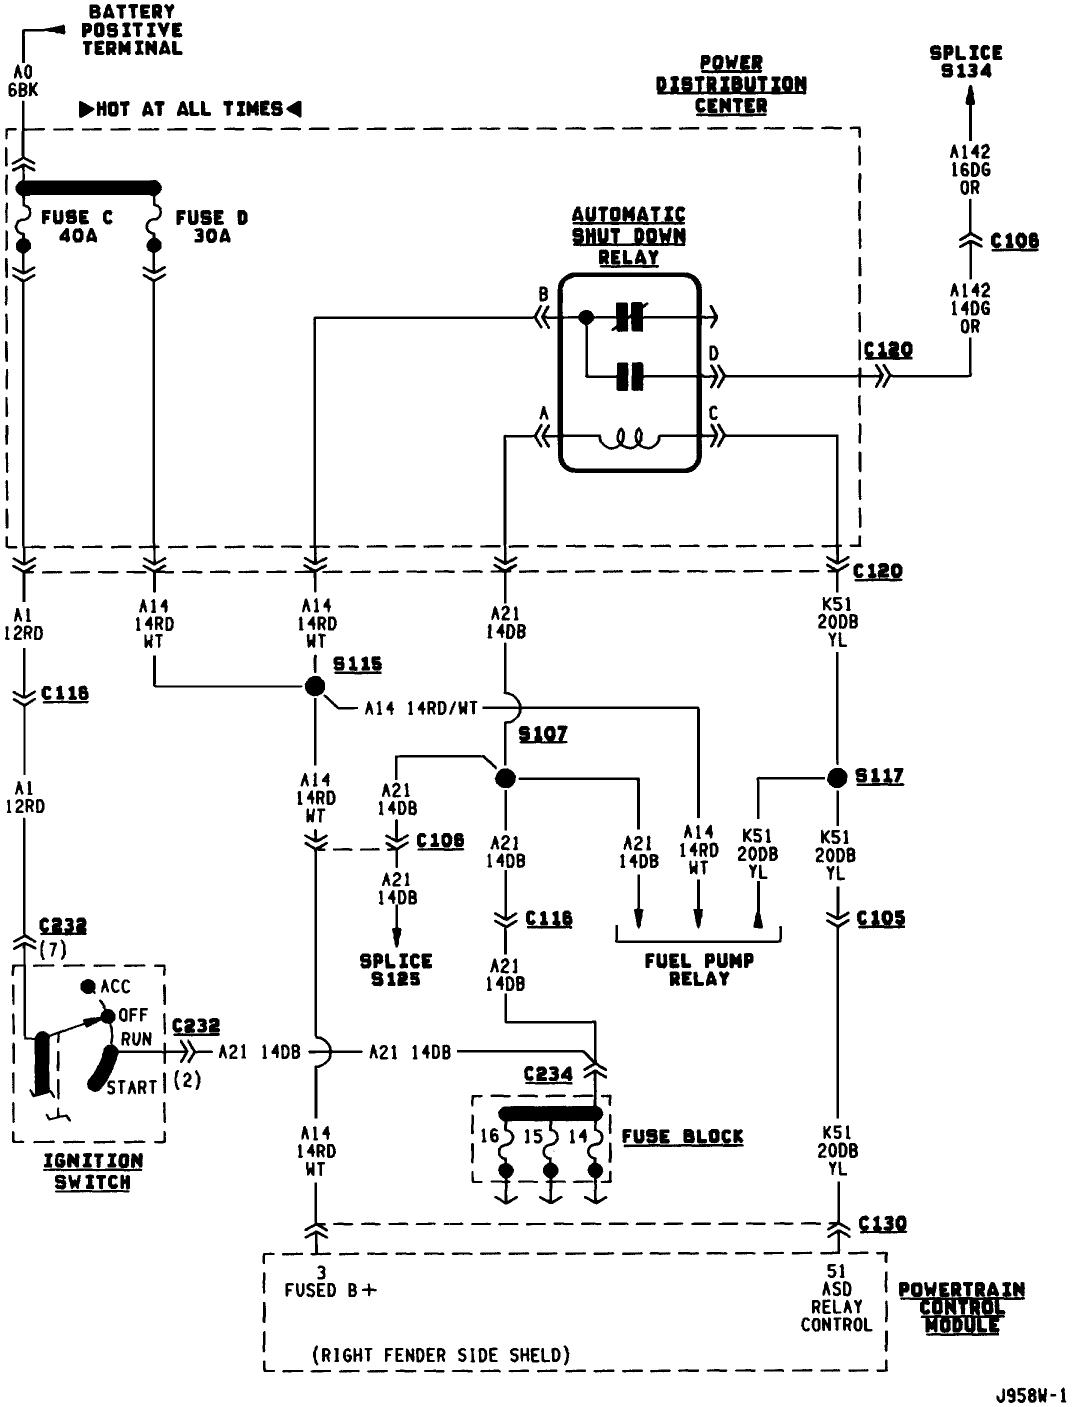 1997 dodge dakota fuse box diagram